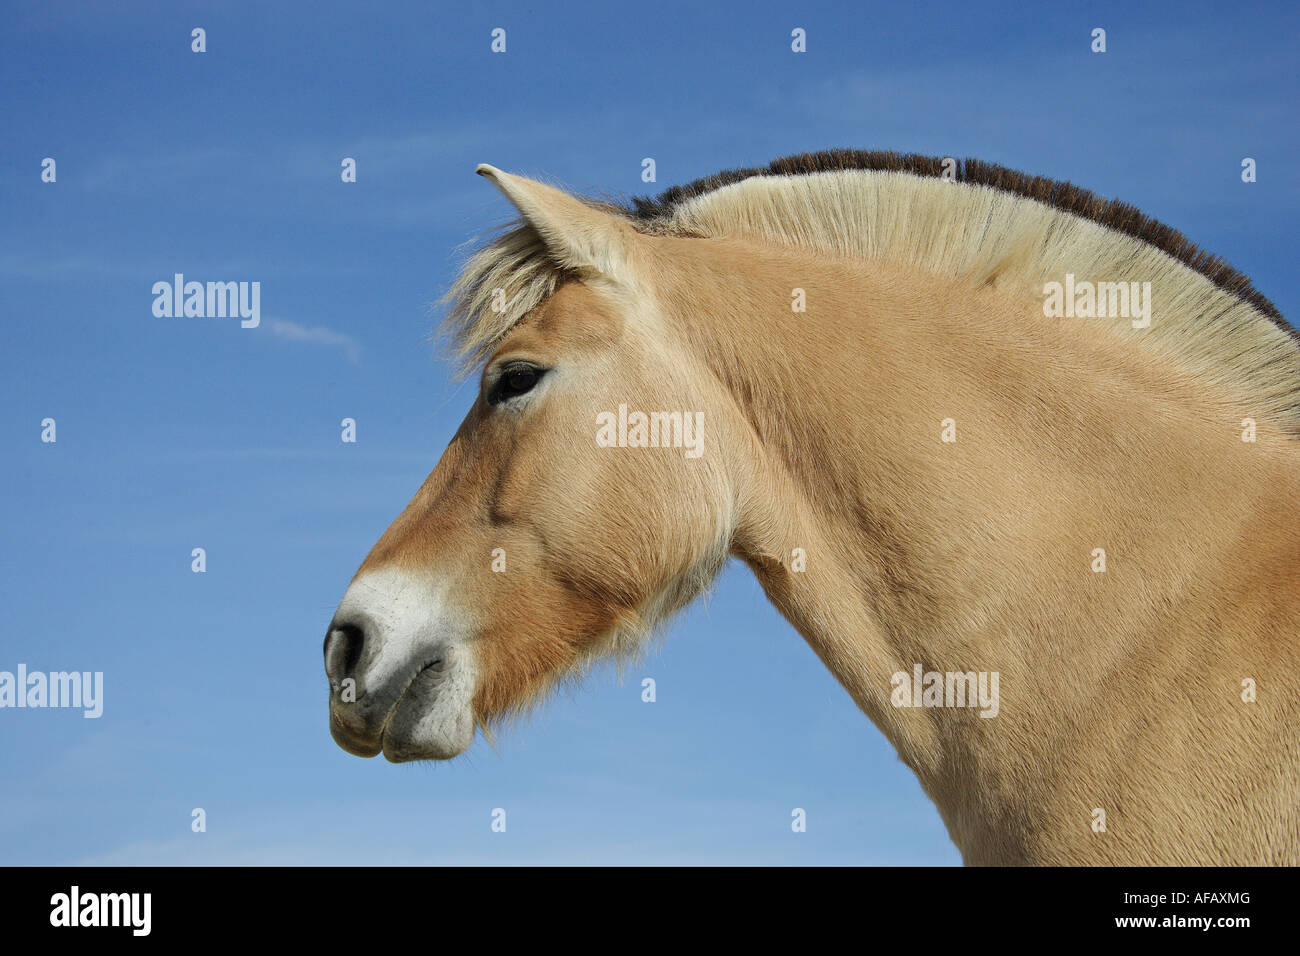 Norwegian Fjord horse - portrait Stock Photo